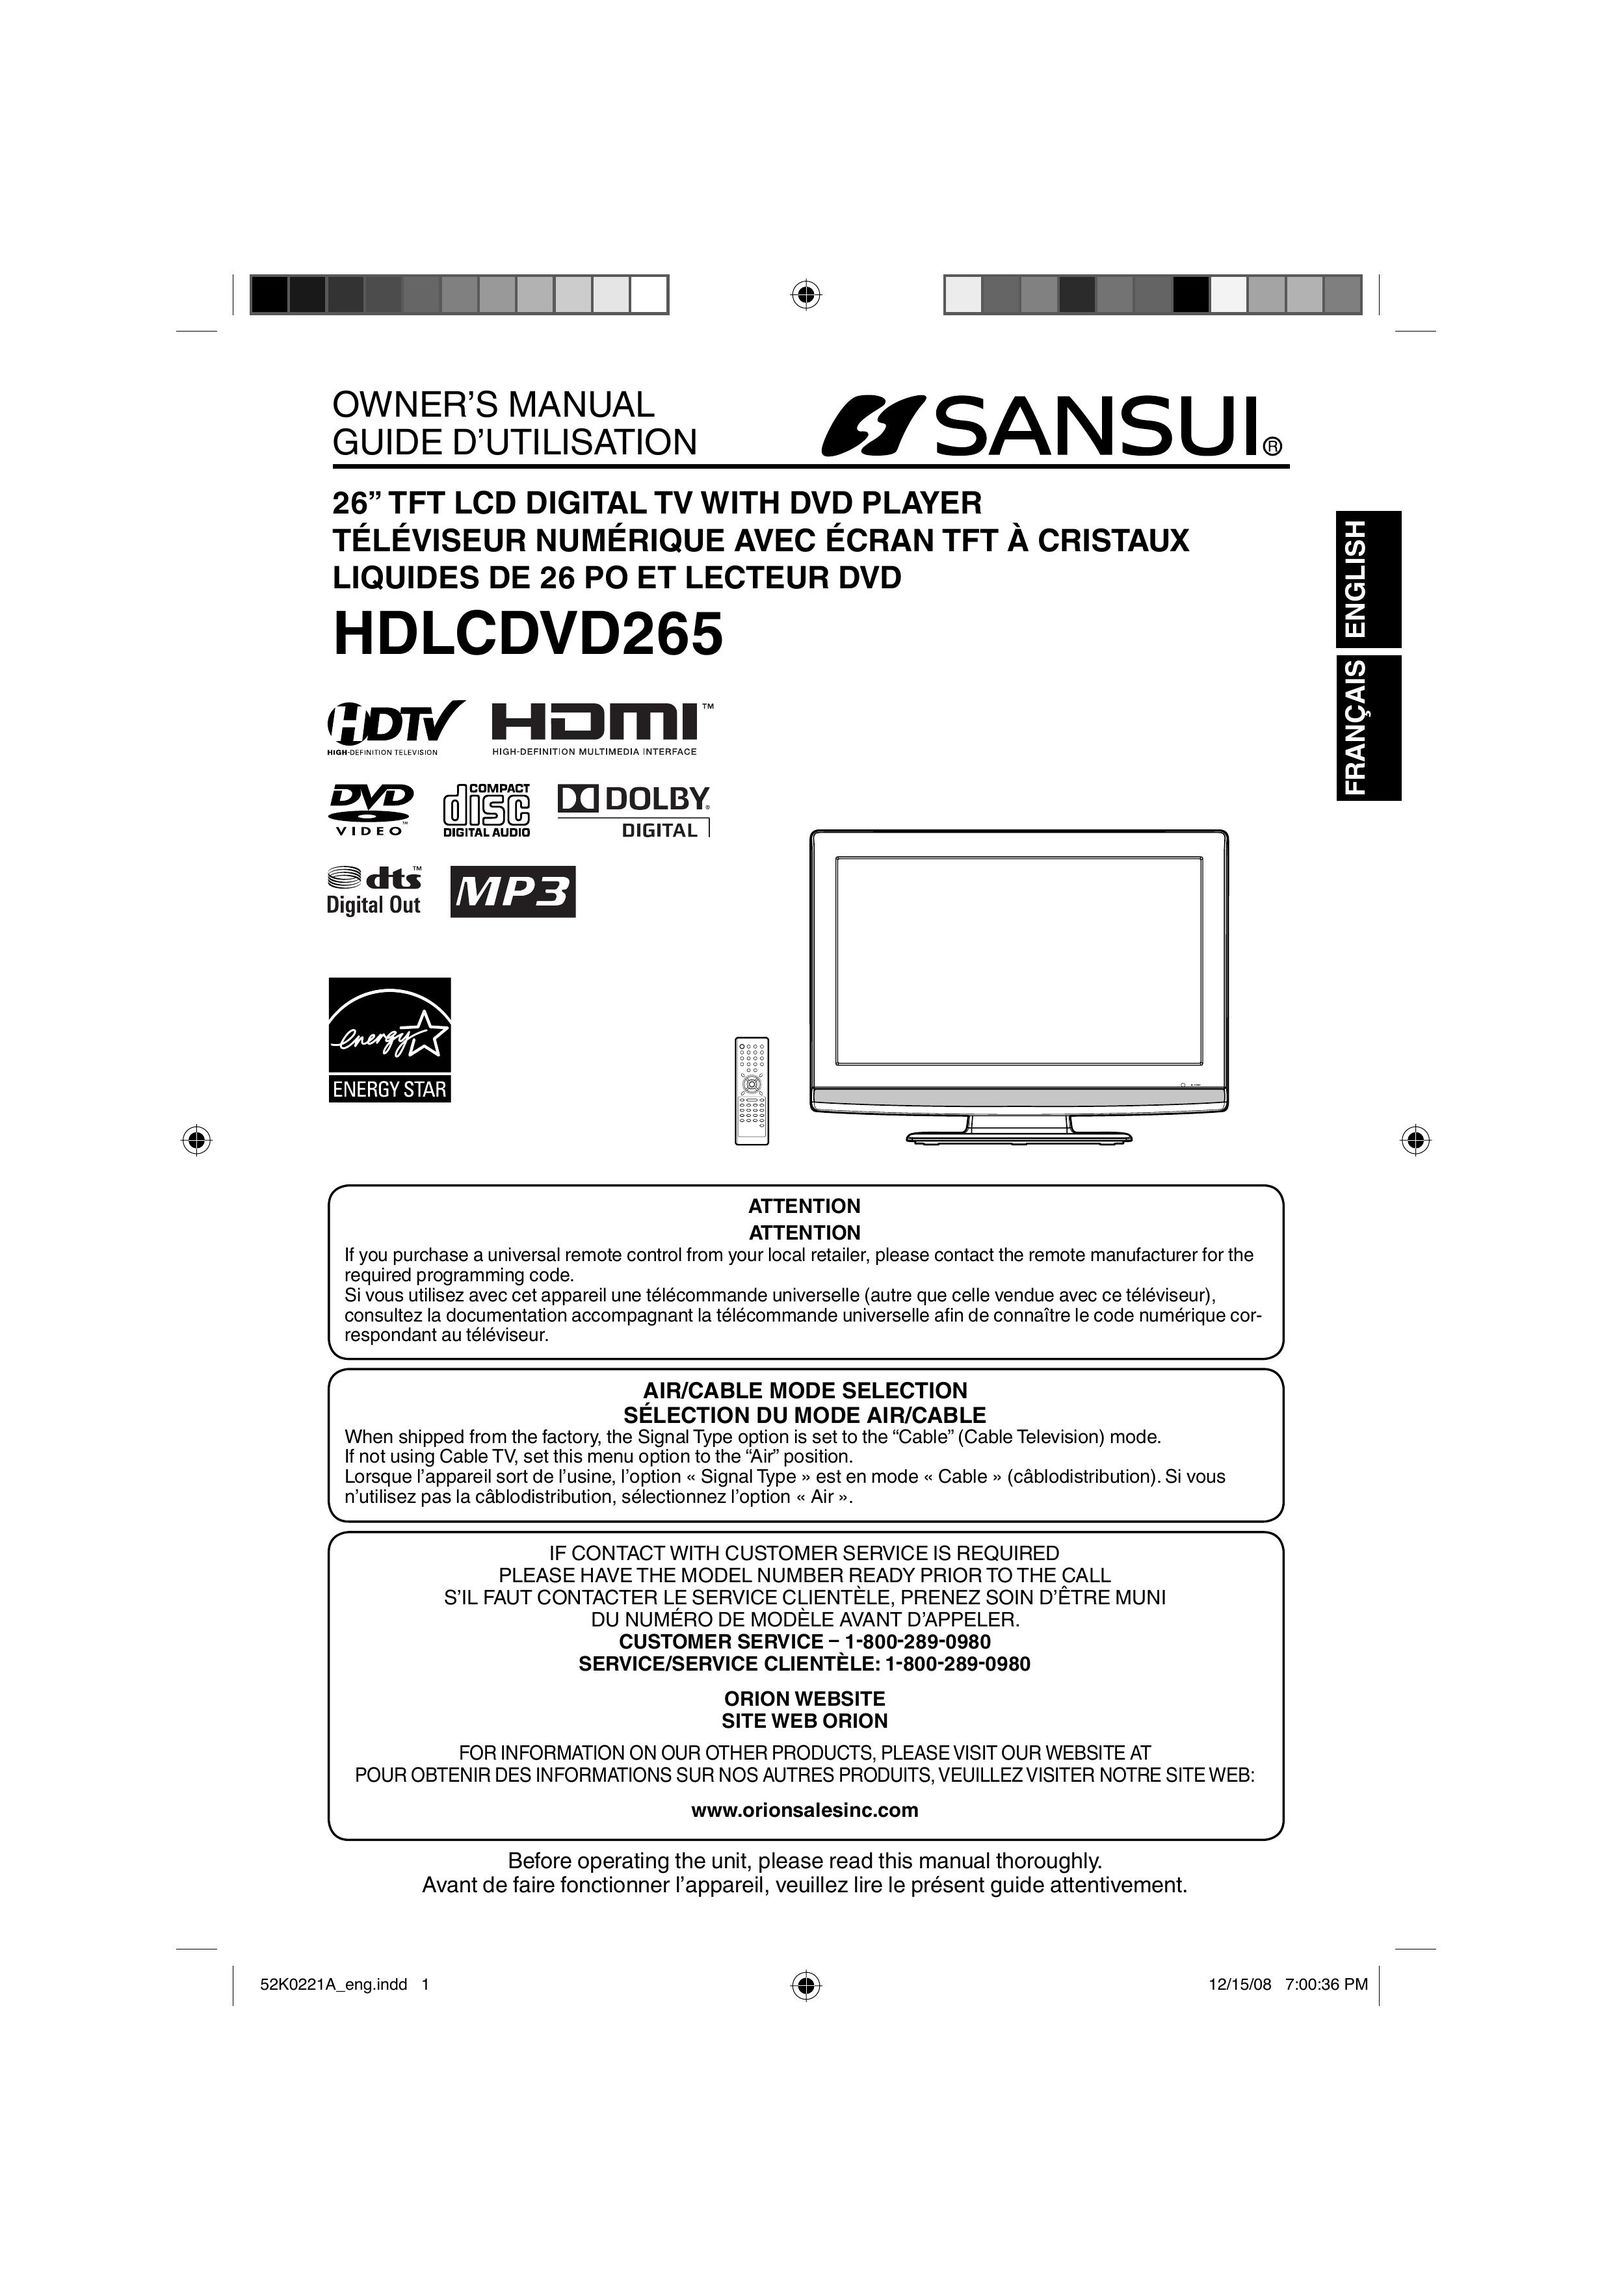 Sansui HDLCDVD265 TV DVD Combo User Manual